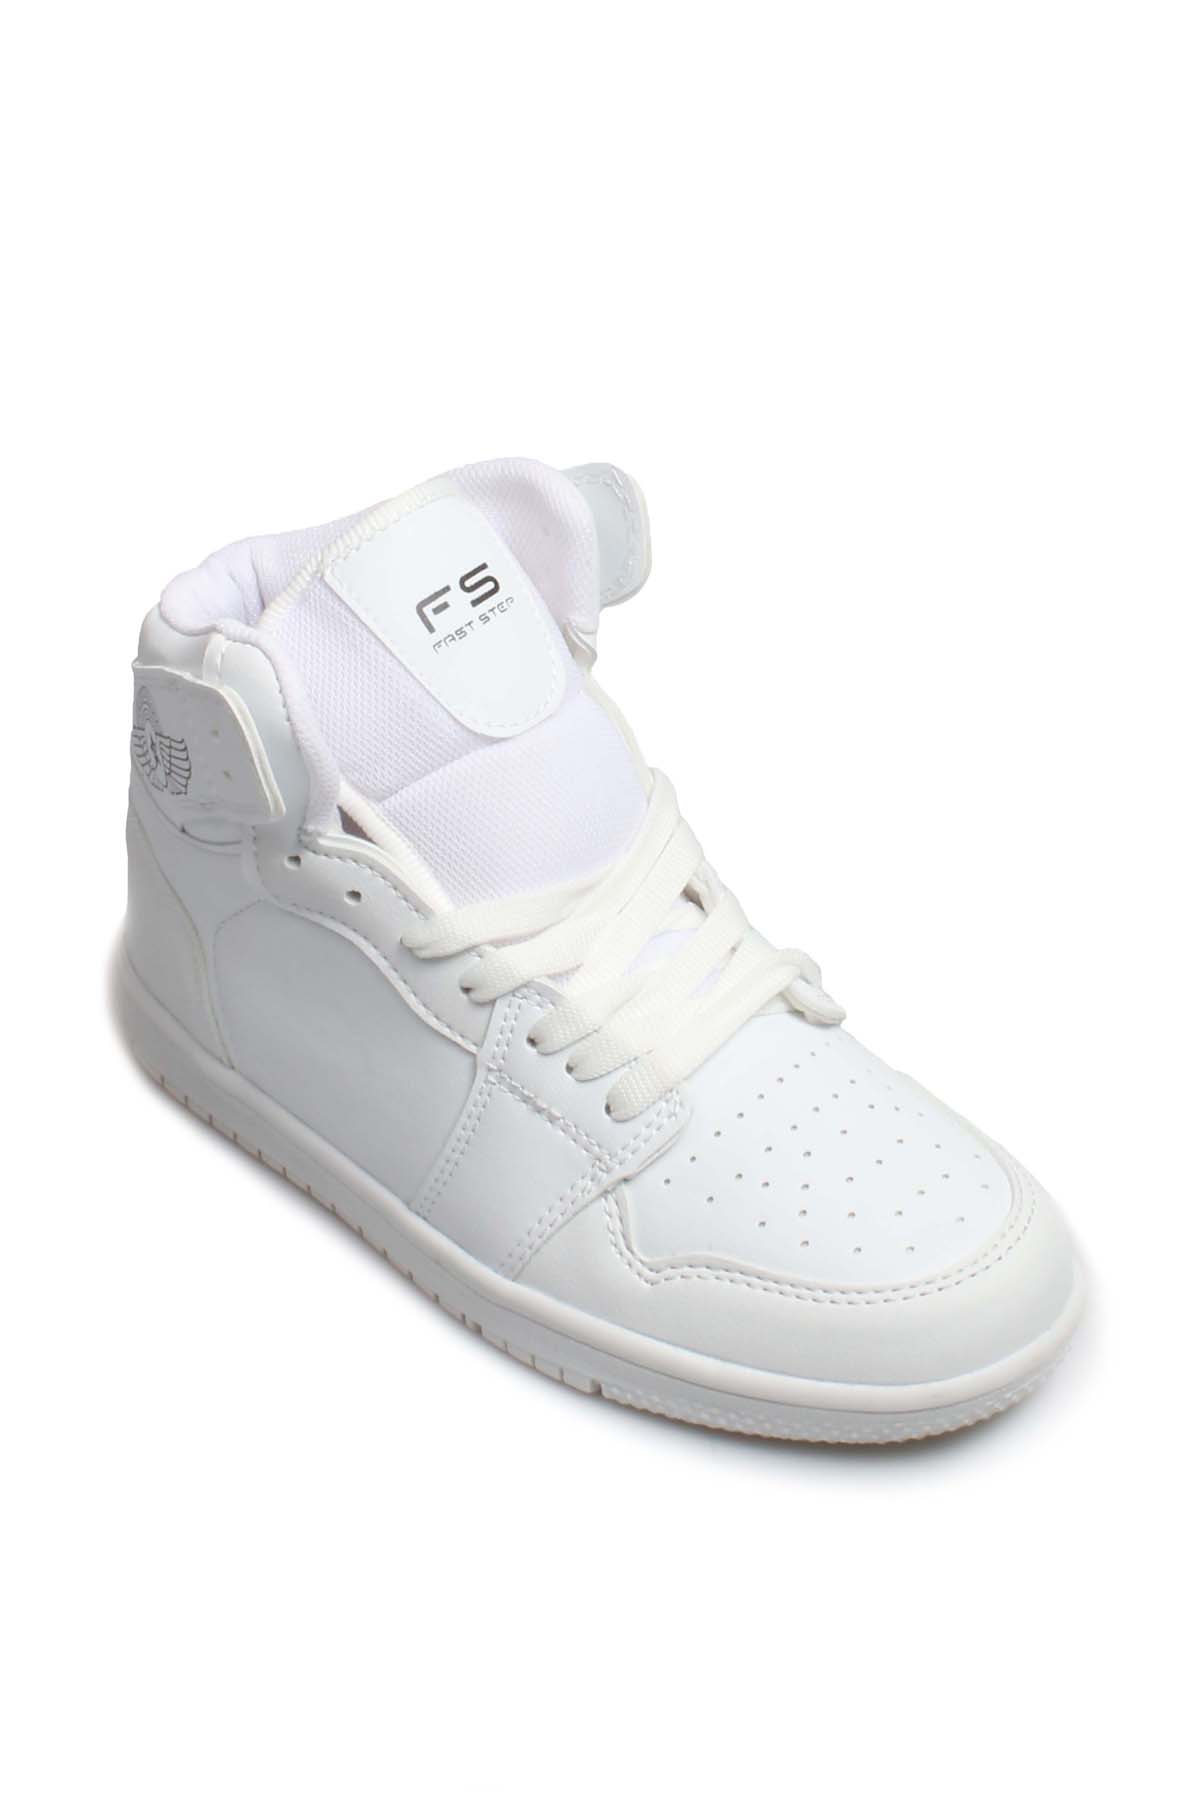 Fast Step Unisex Sport Shoes White 500XA8070